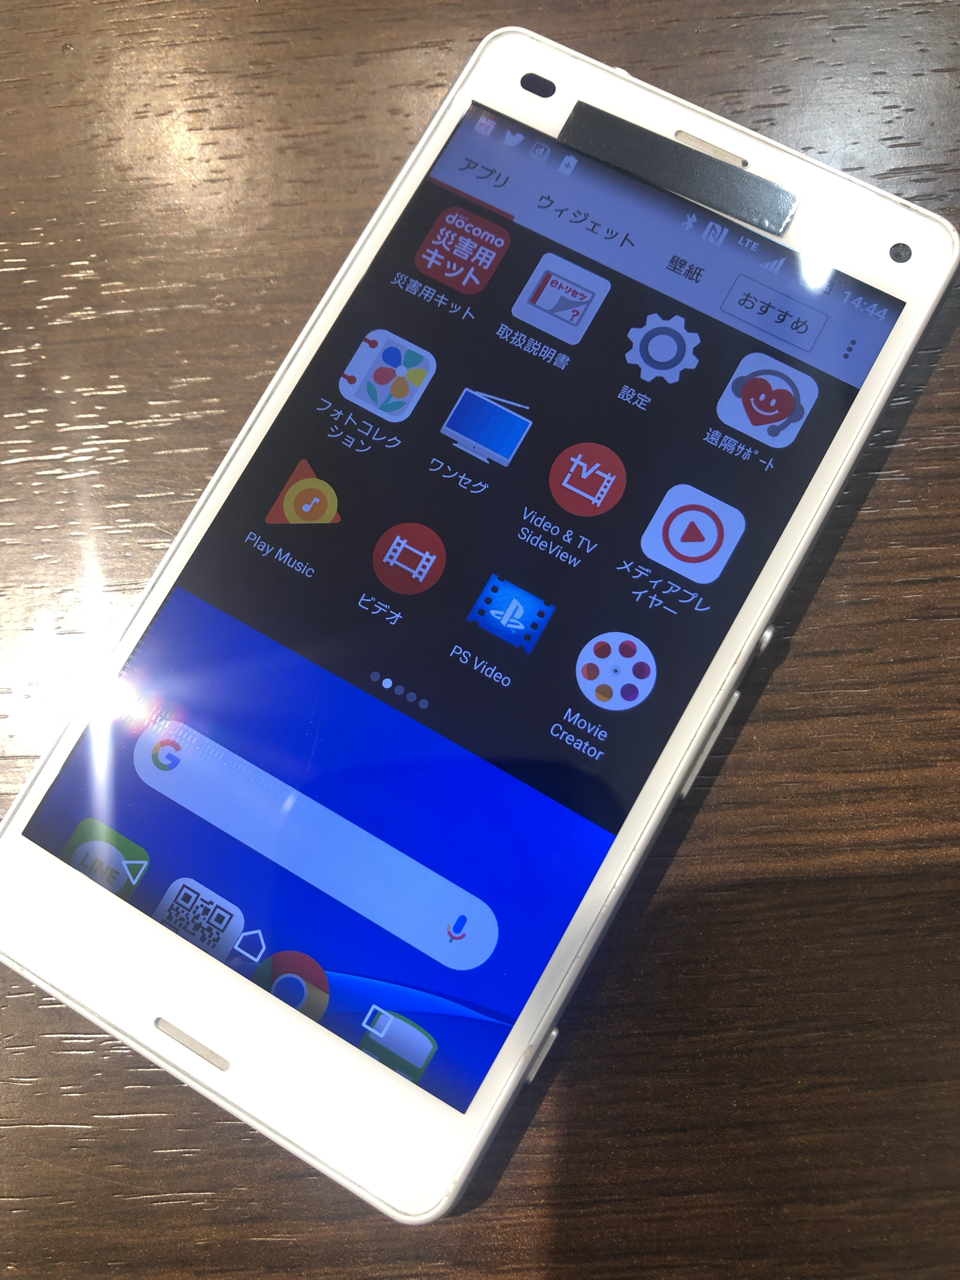 Z3compact 画面のタッチが出来ない そうした場合の改善方法とは Xperia Galaxy Zenfone Huawei Nexus修理のアンドロイドホスピタル